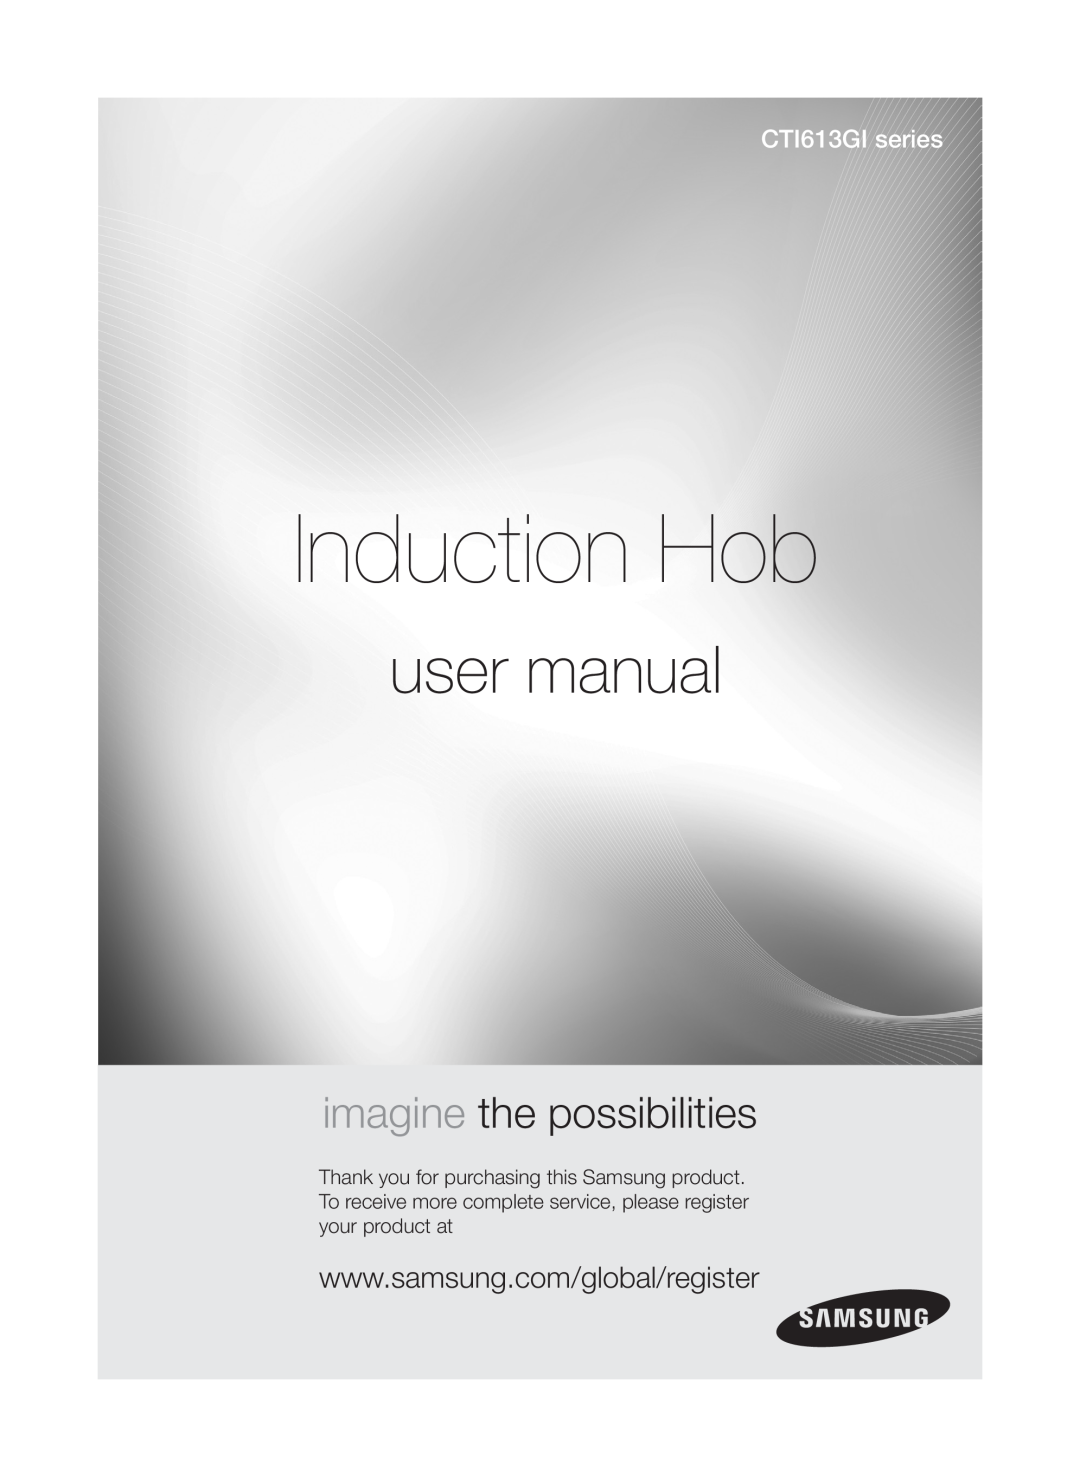 Samsung user manual Induction Hob, imagine the possibilities, CTI613GI series 